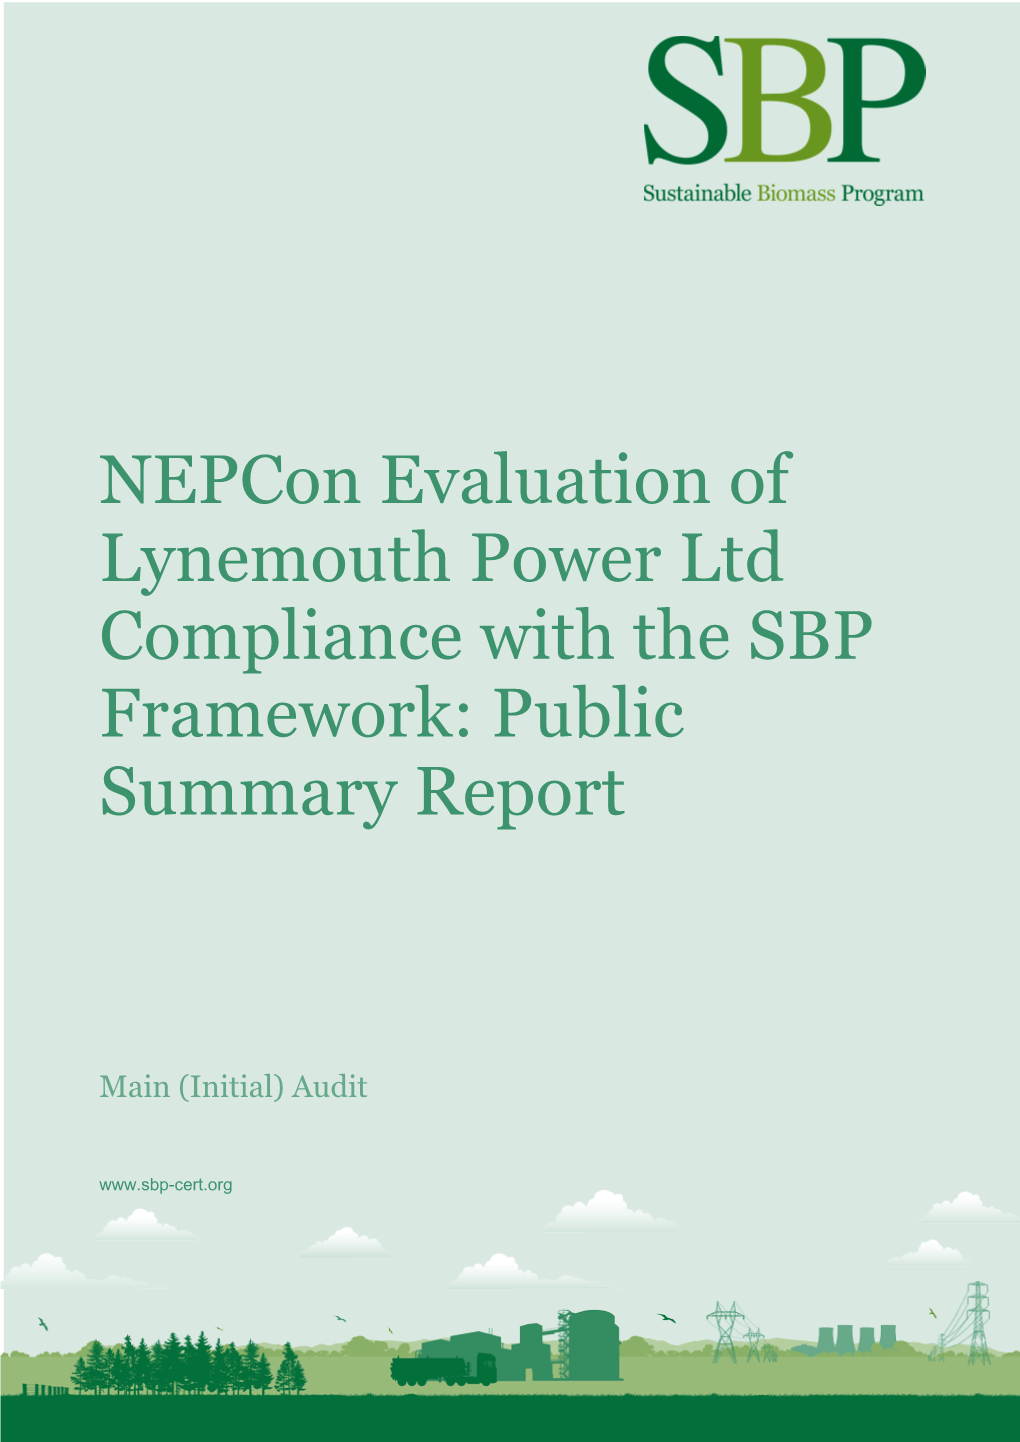 Nepcon CB Public Summary Report V1.4 Main Audit Lynemouth Power